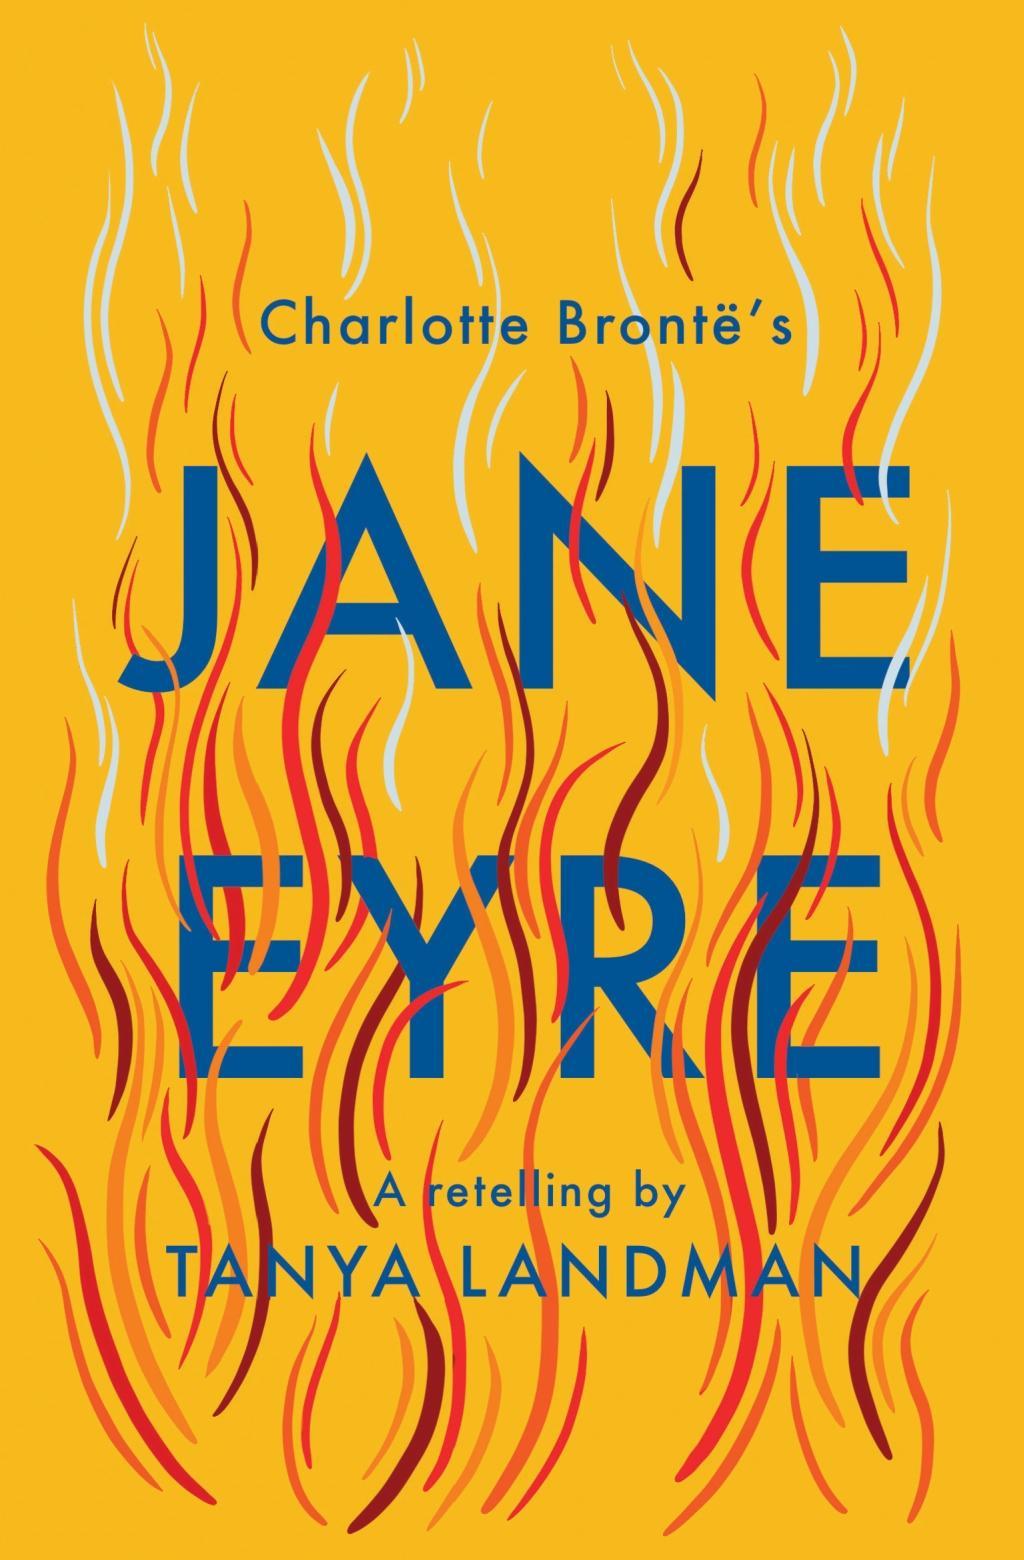 Carte Jane Eyre 